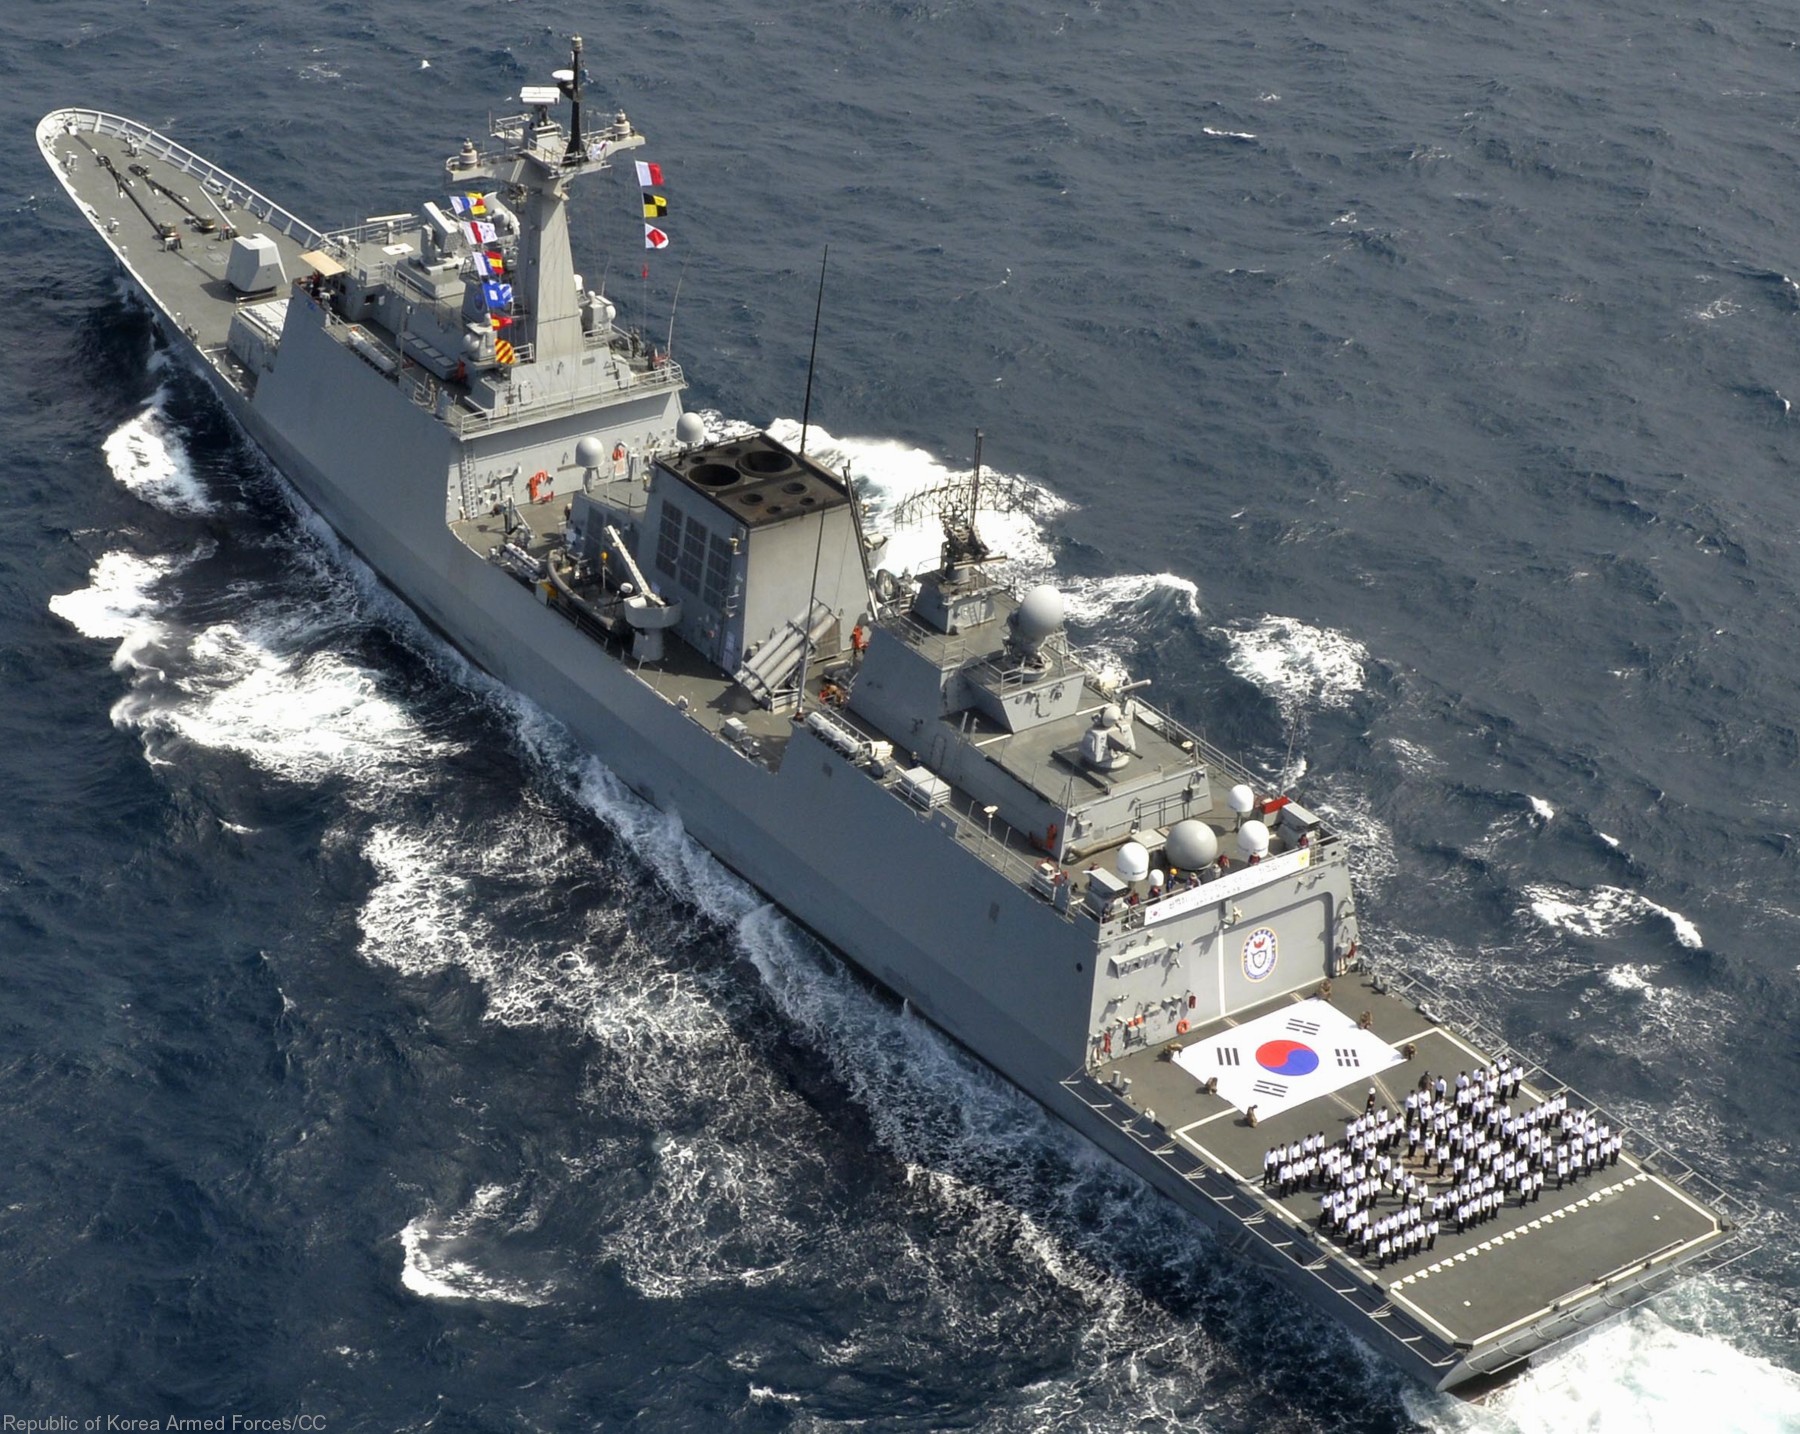 ddh-981 roks choe yeong chungmugong yi sun-sin class destroyer korean navy rokn 10c